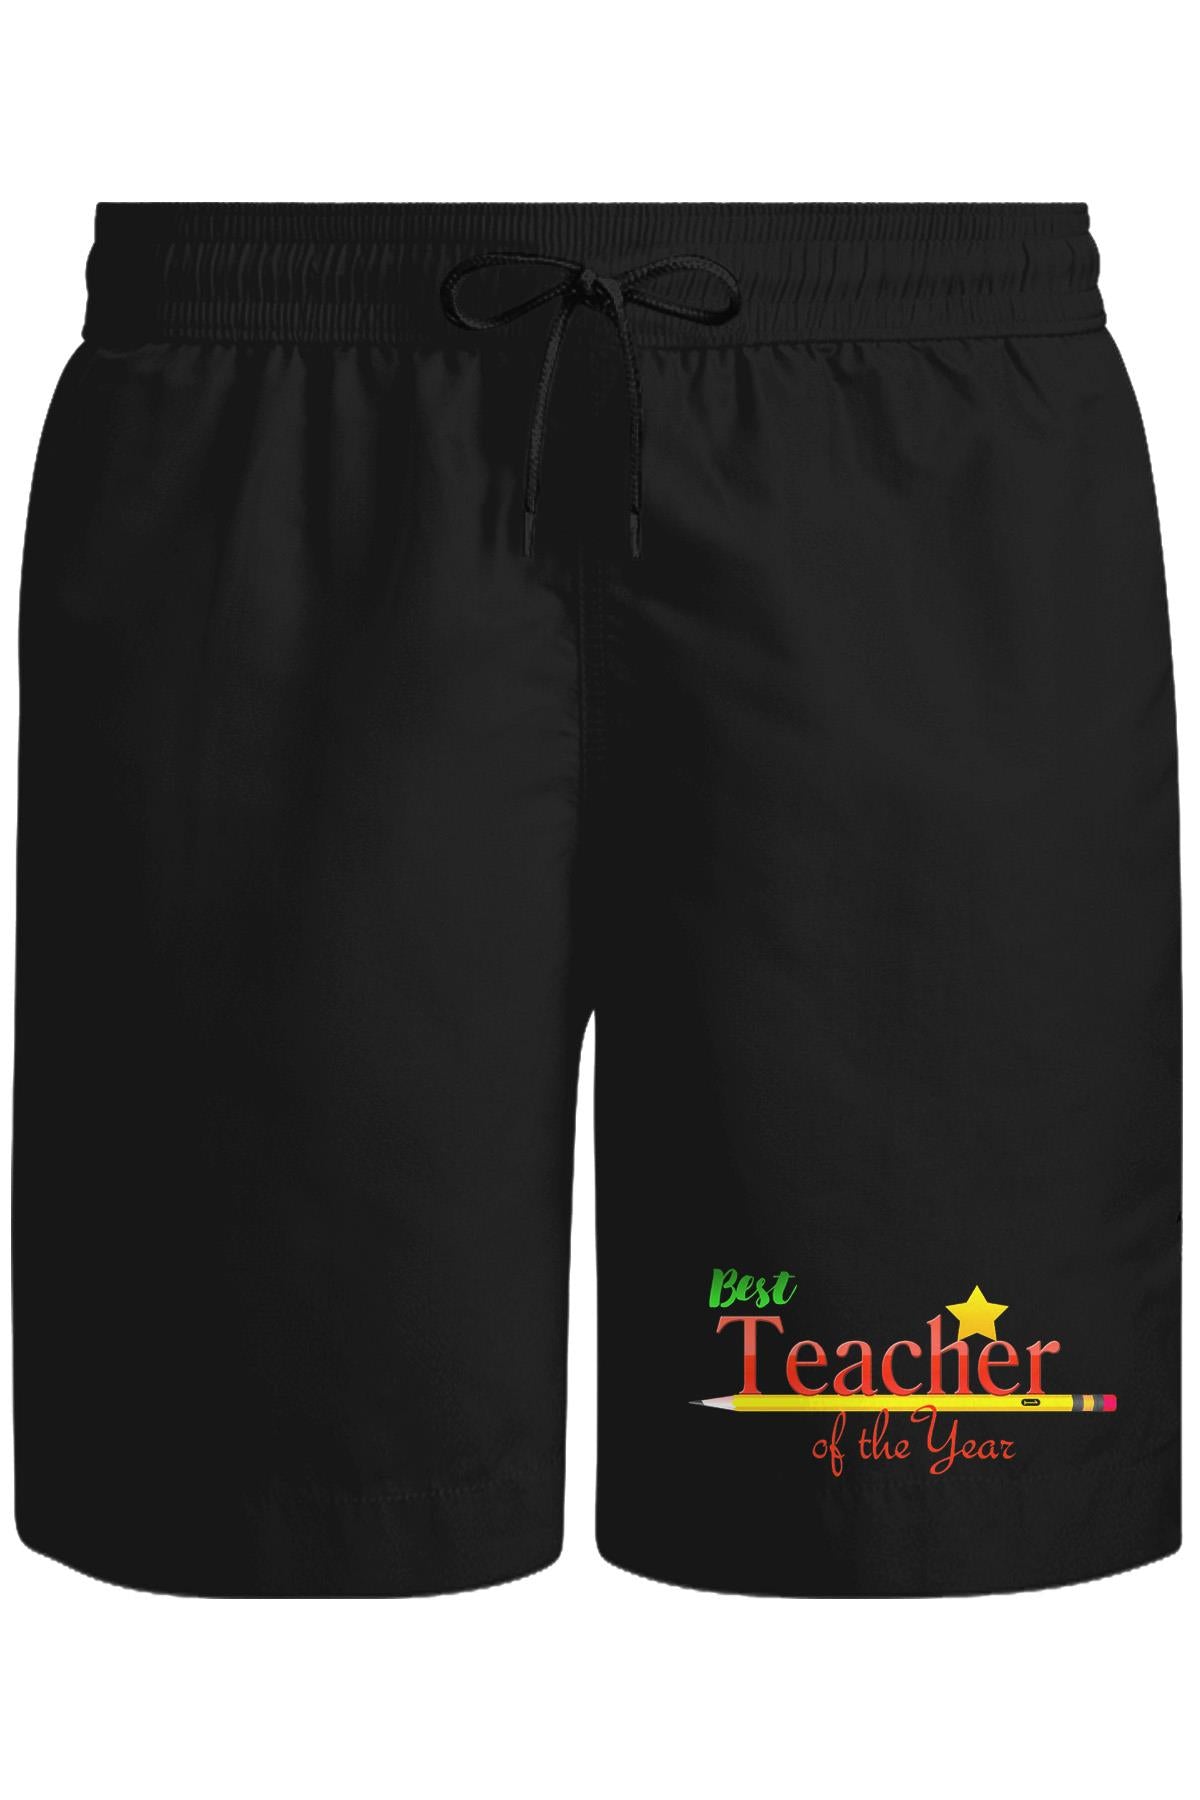 Best Teacher of the Year Teachers' Day Unisex Black Shorts